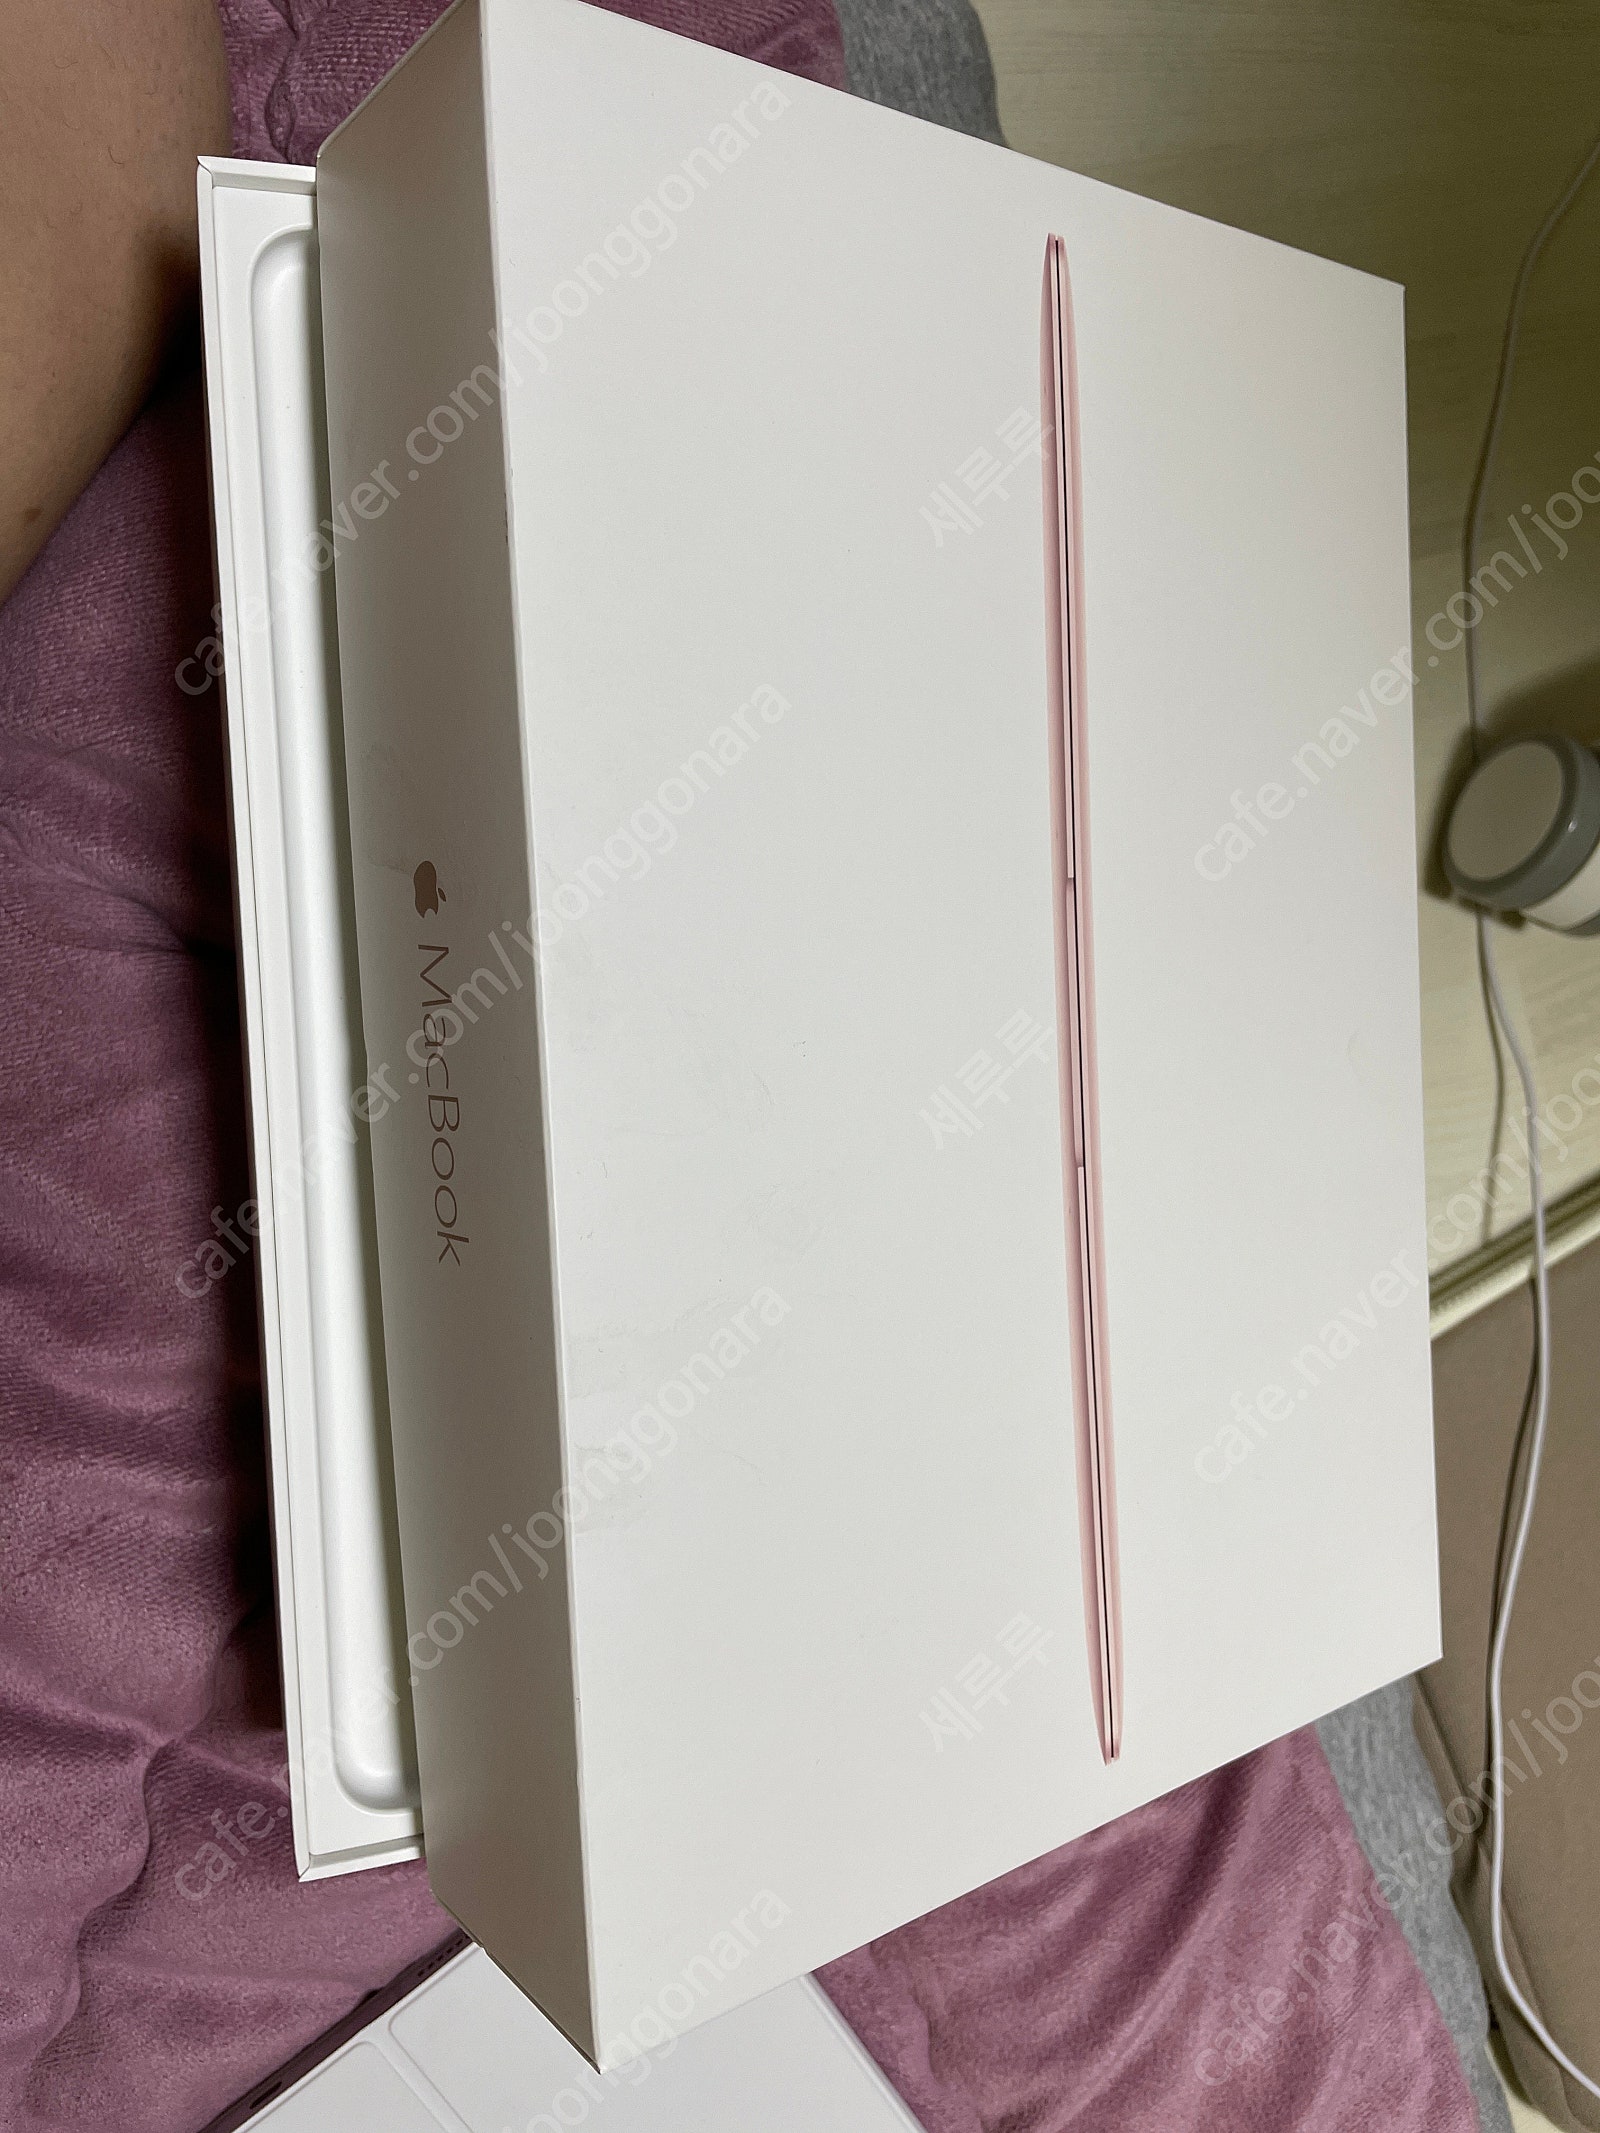 mac book 12-inch 2016 early 로즈골드 팝니다